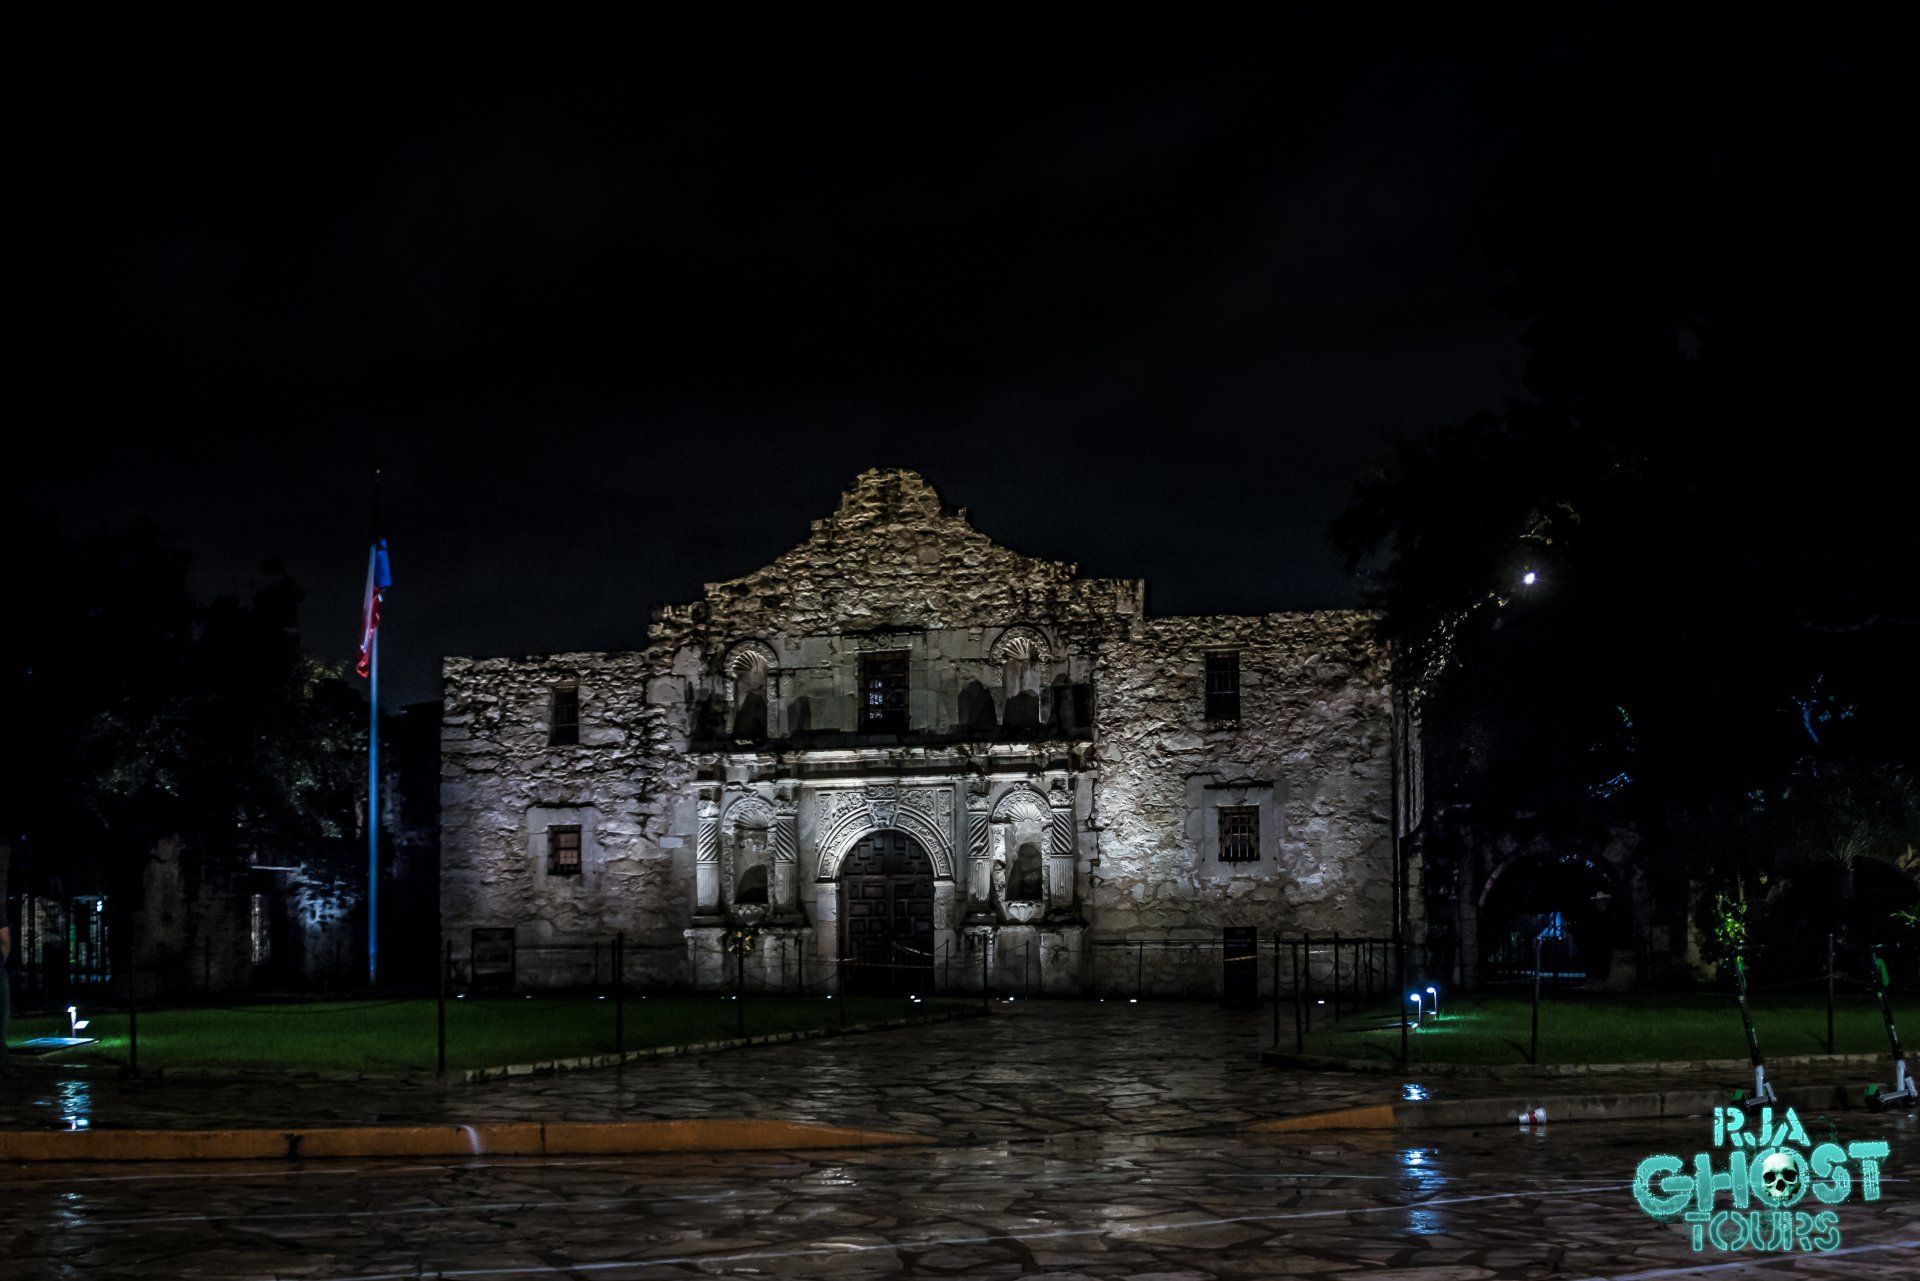 An image of the Alamo in San Antonio, Texas, during the night.